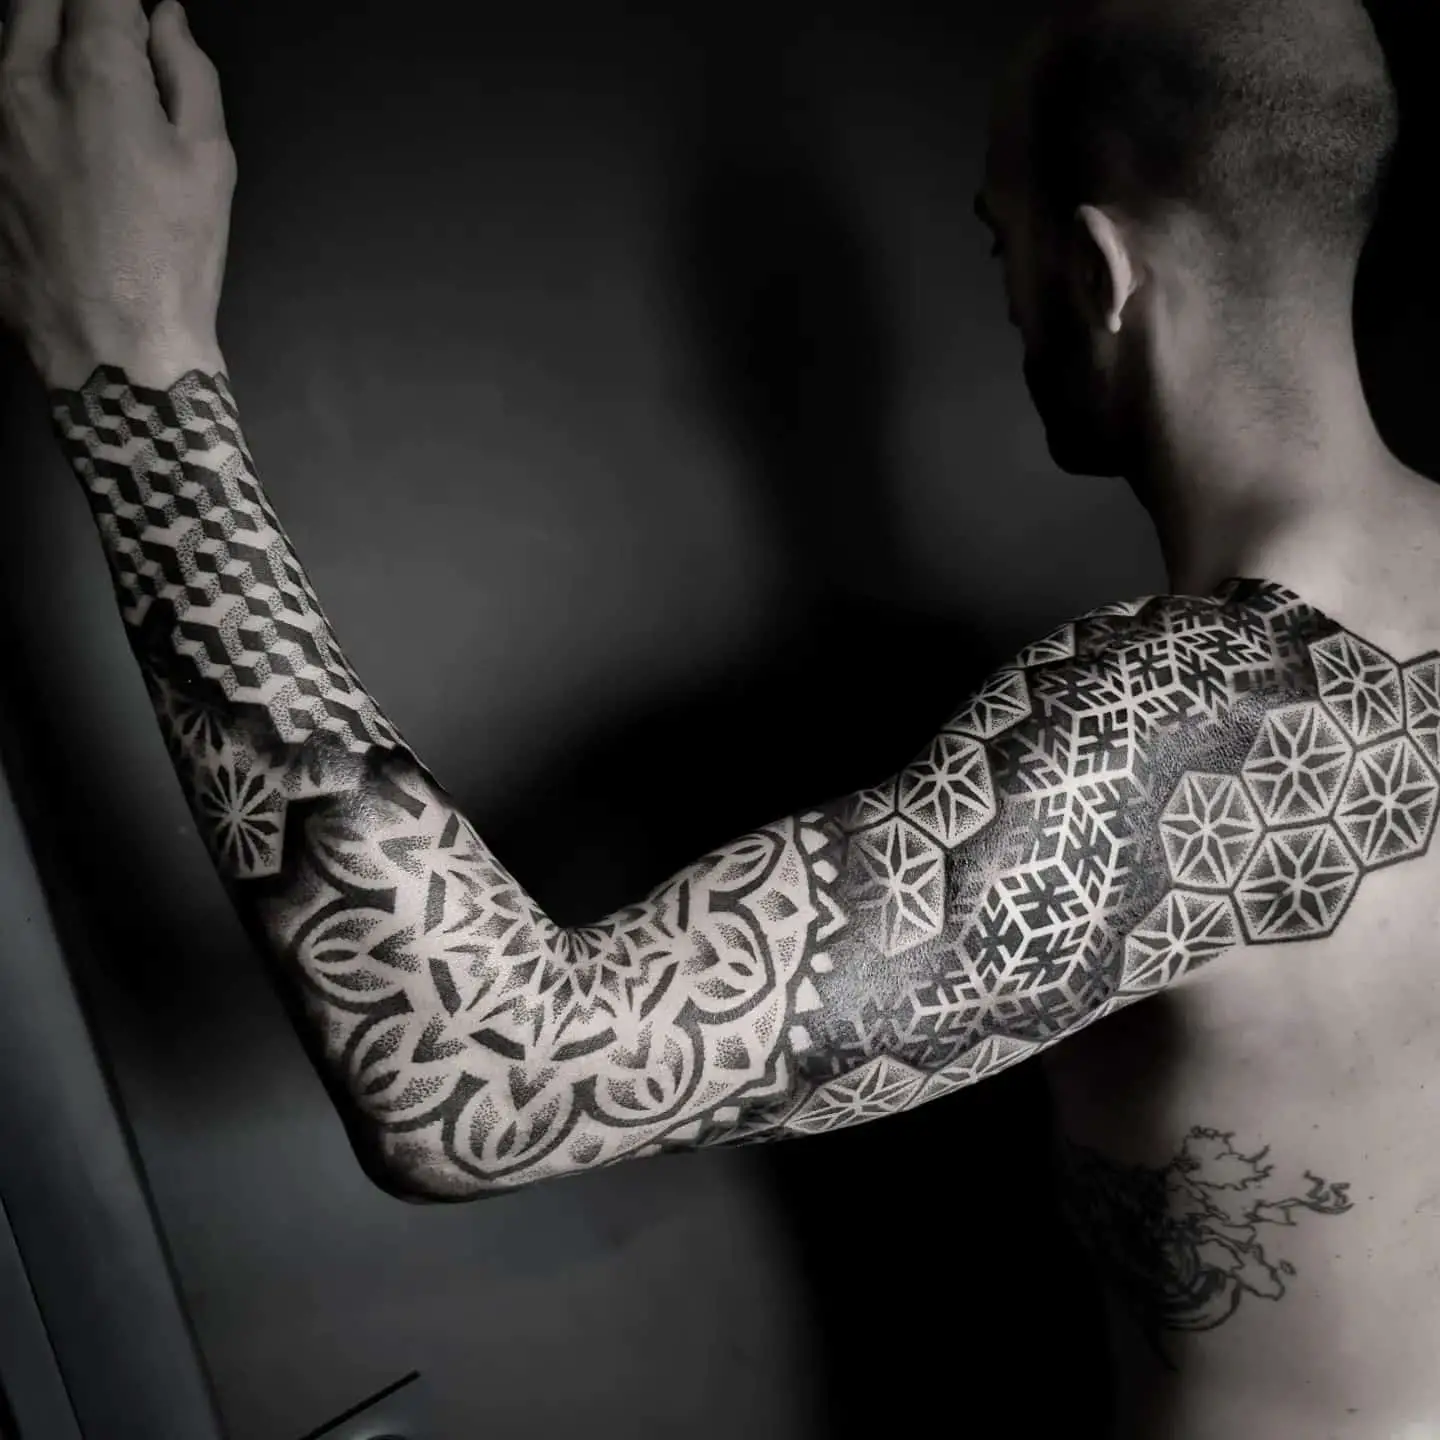 dotwork tattooo on arm by tom